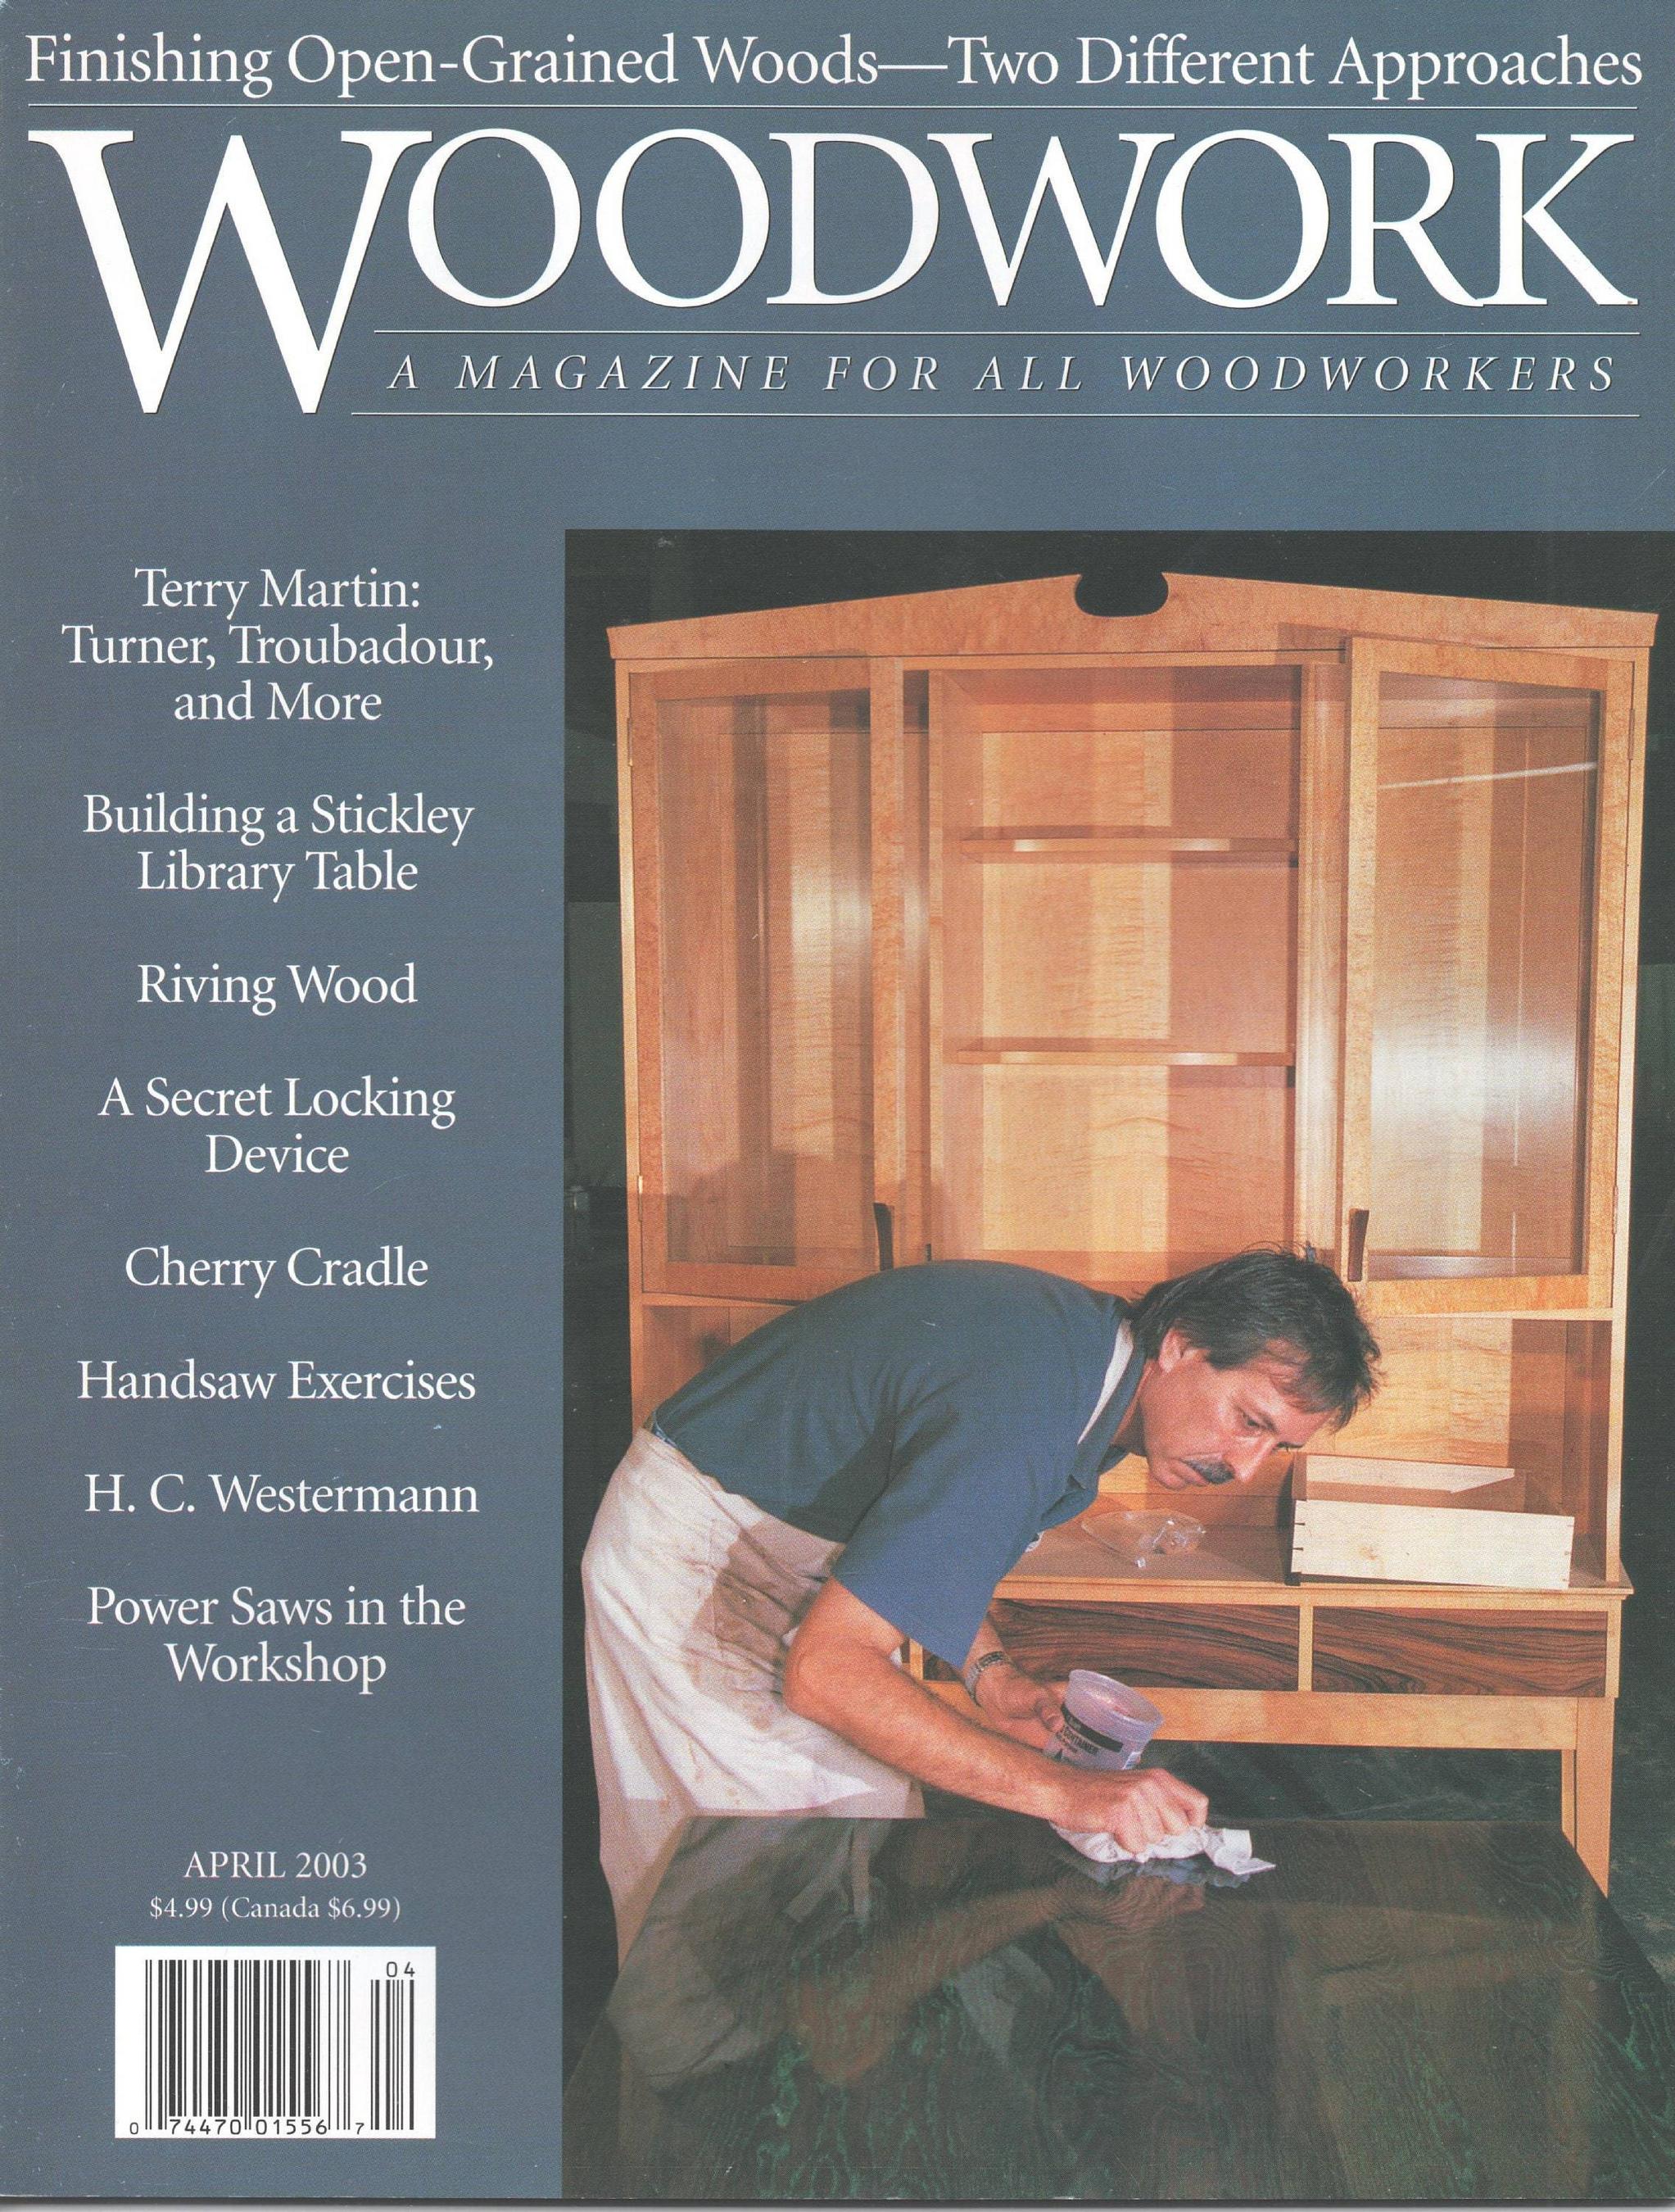 The Best Woodwork Magazines
